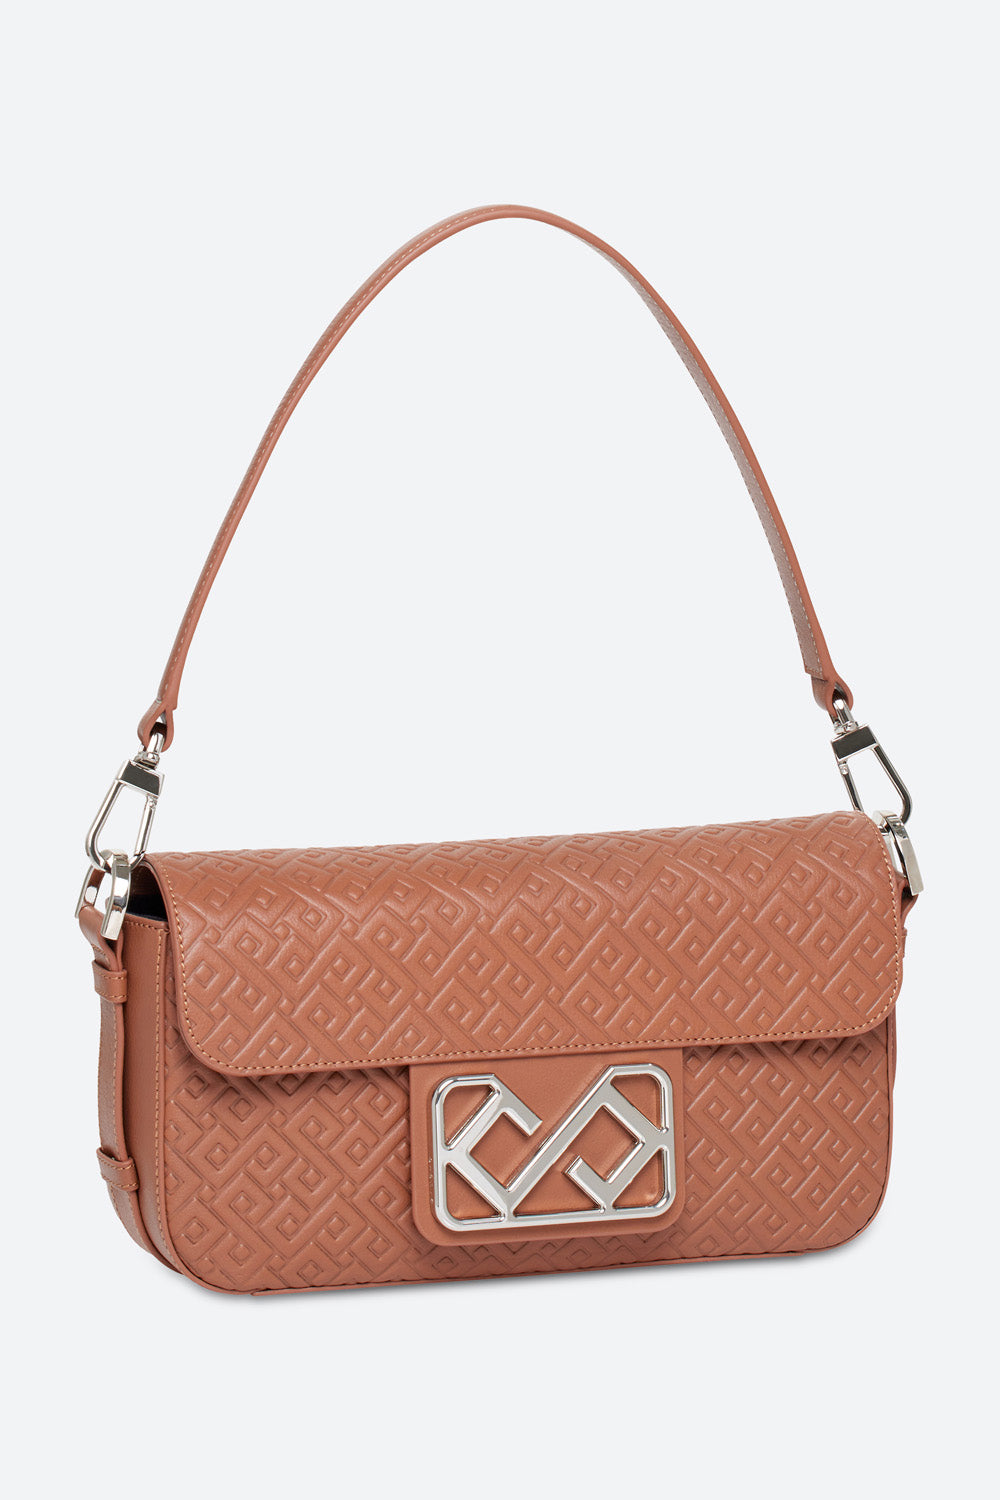 Malvina Baguette Handbag in Cognac, with Polished Chrome Hardware